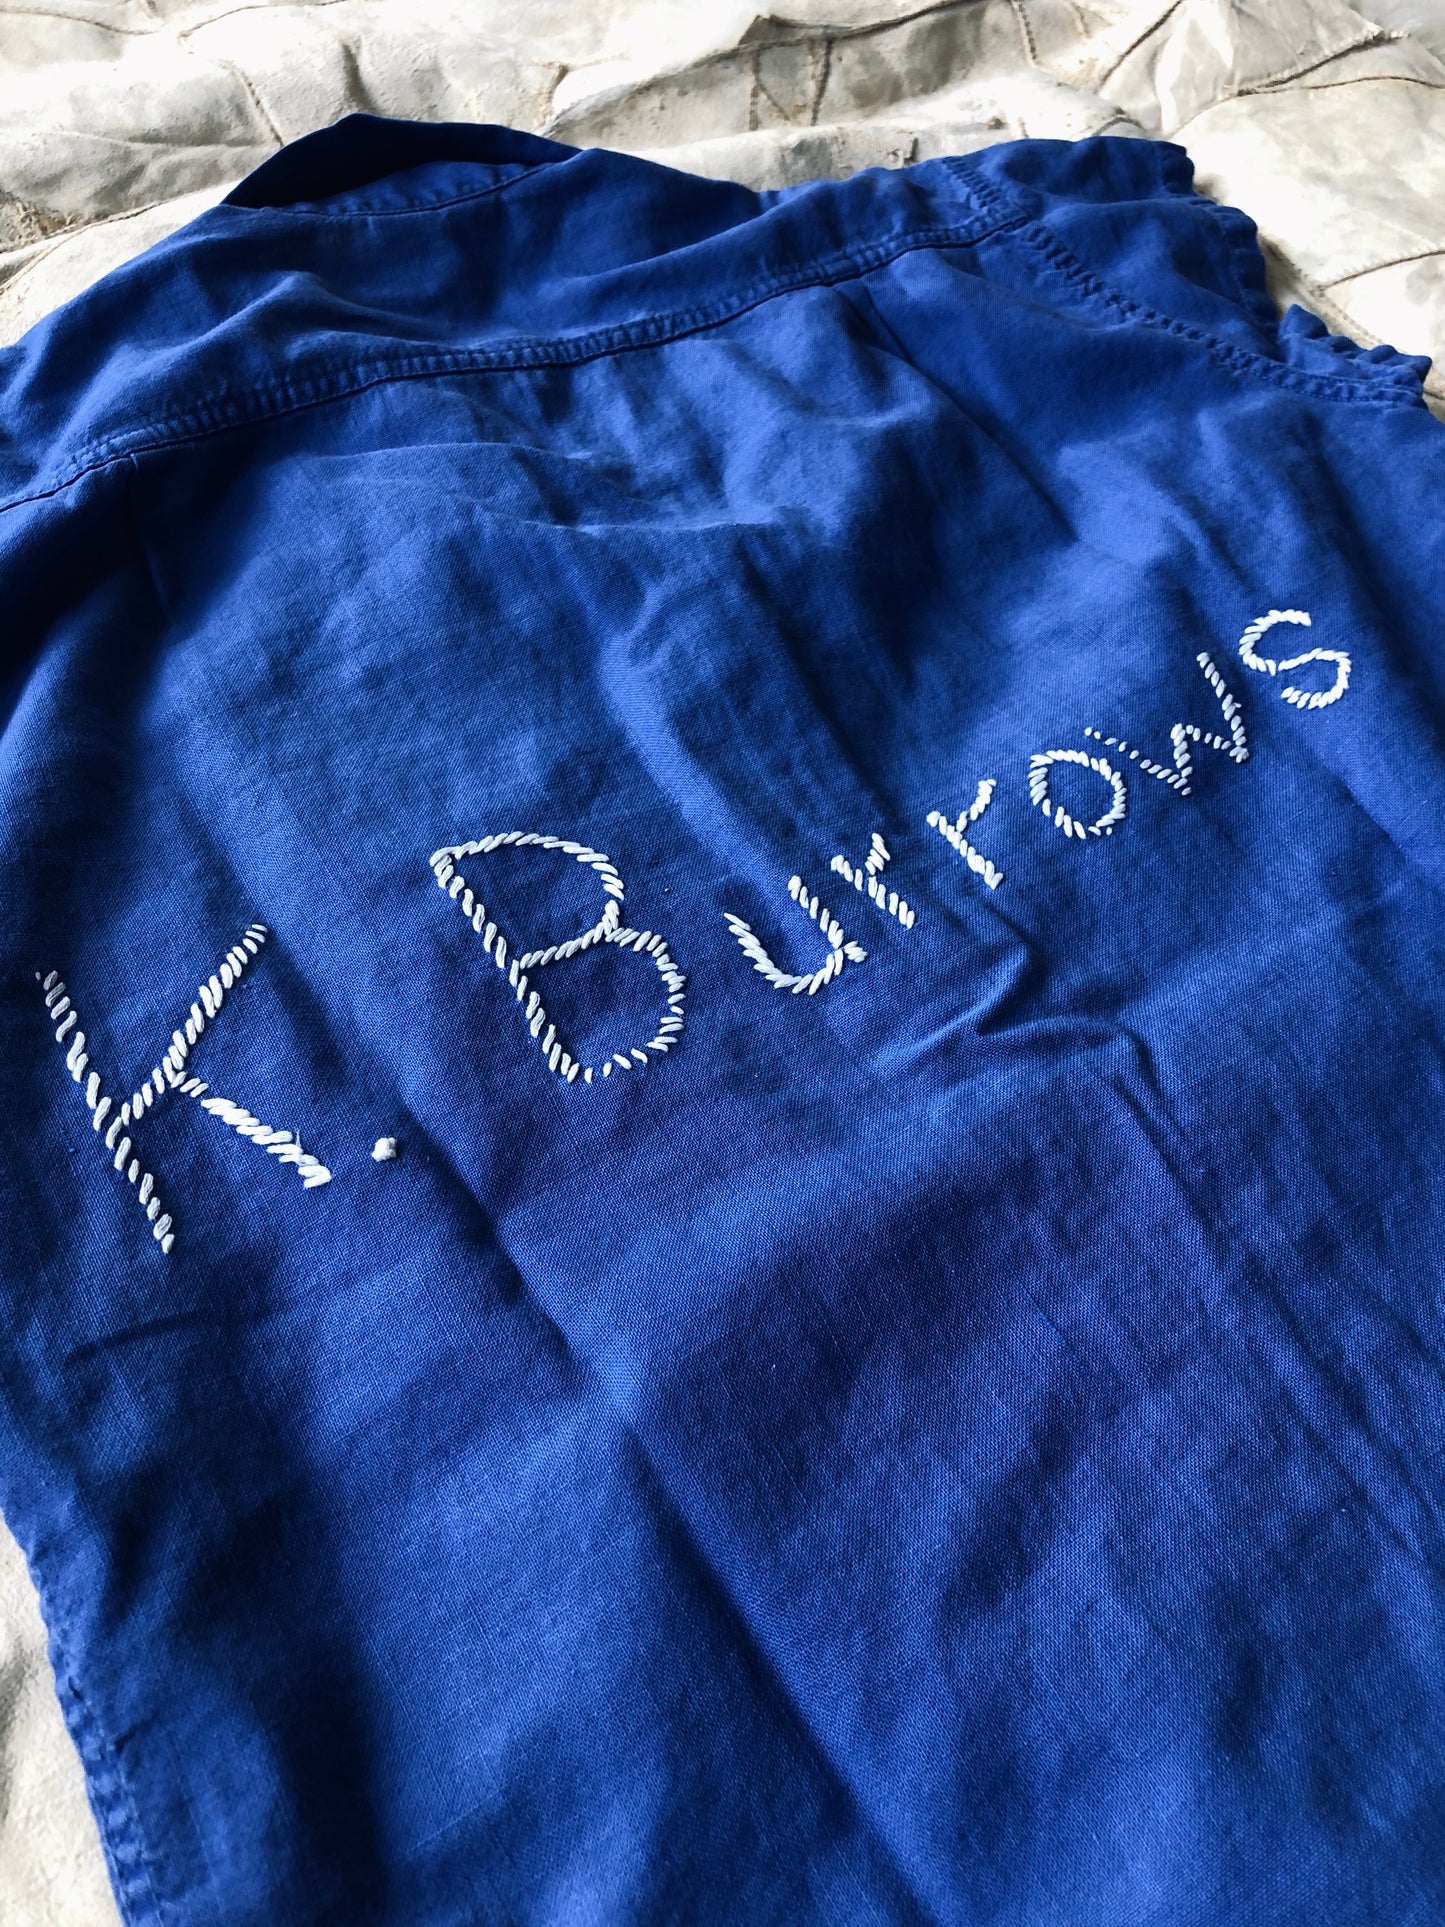 1950’s Broderick Gym Wear Shirt “K. Burrows” | Small